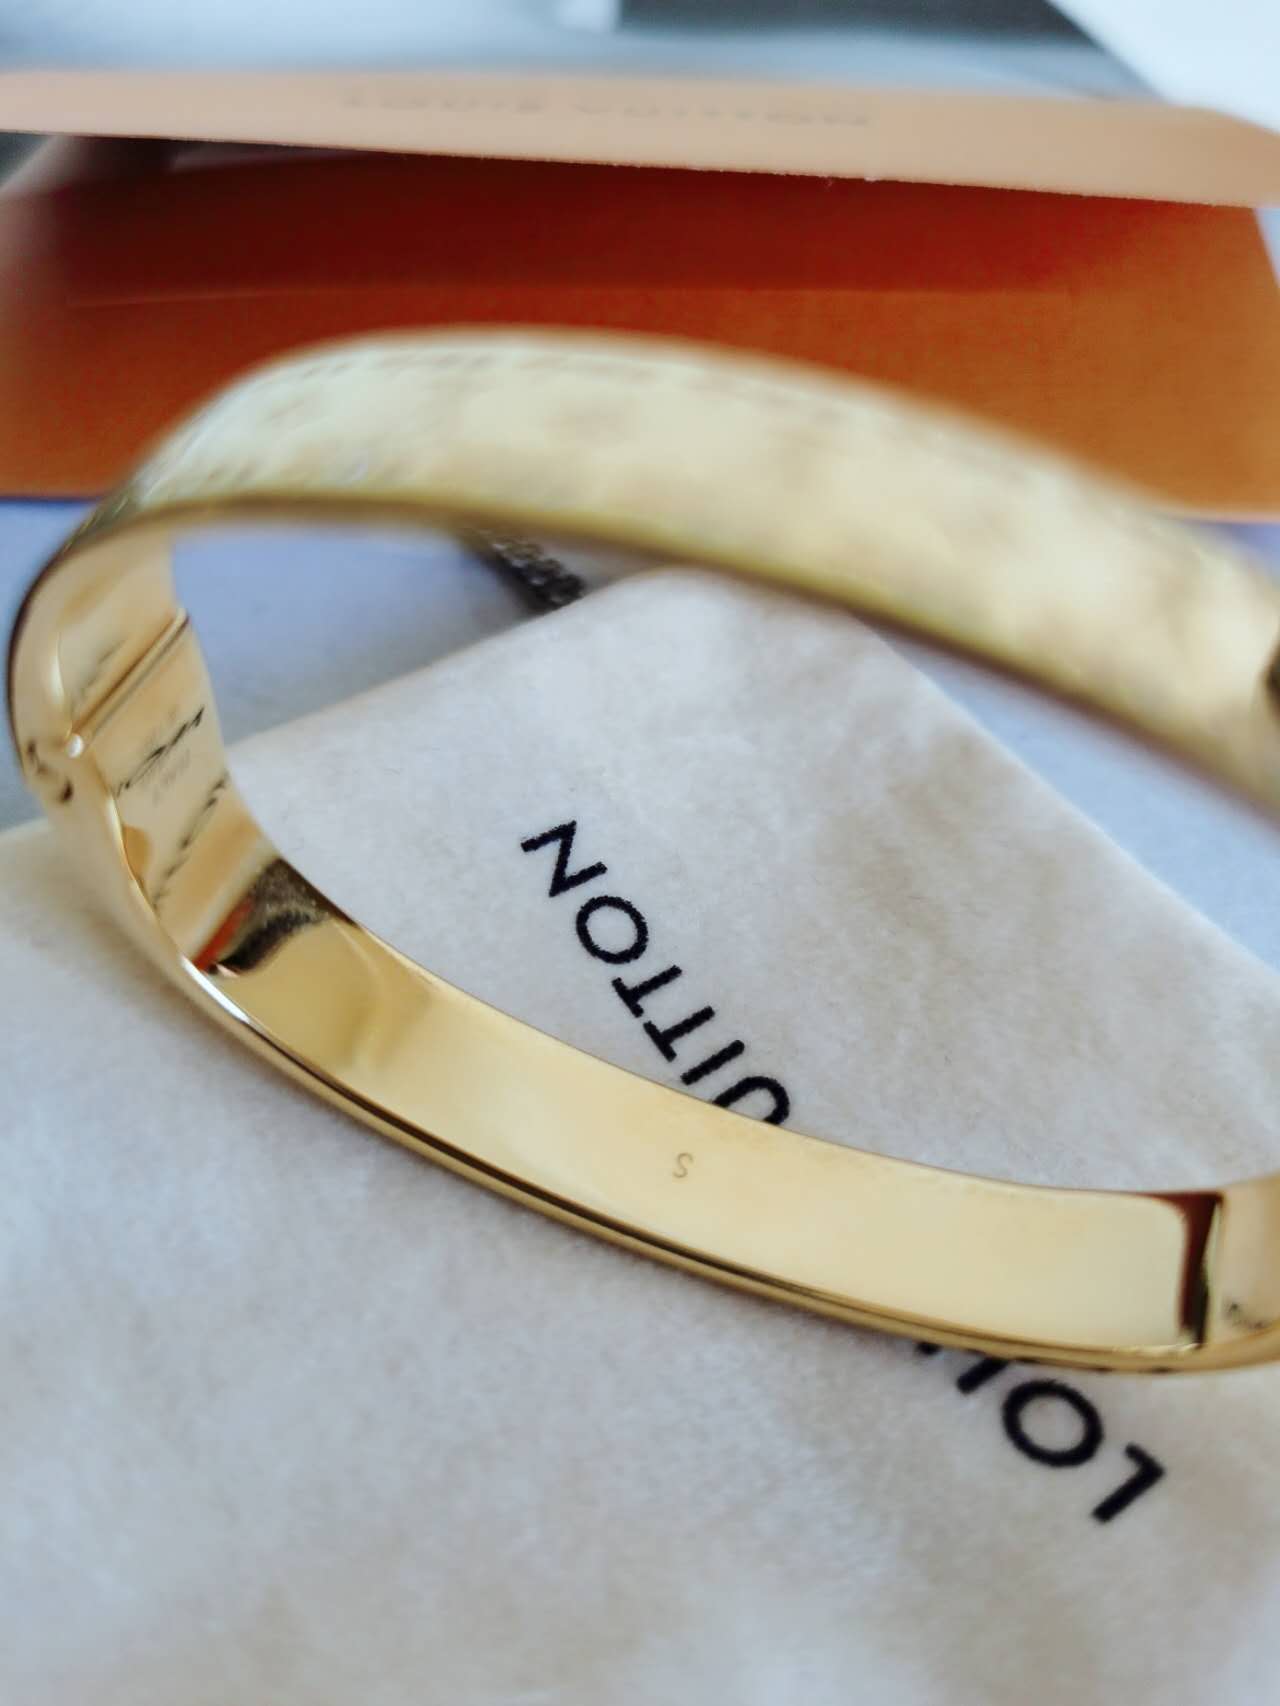 Louis Vuitton Nanogram Strass Bracelet Bango Size S